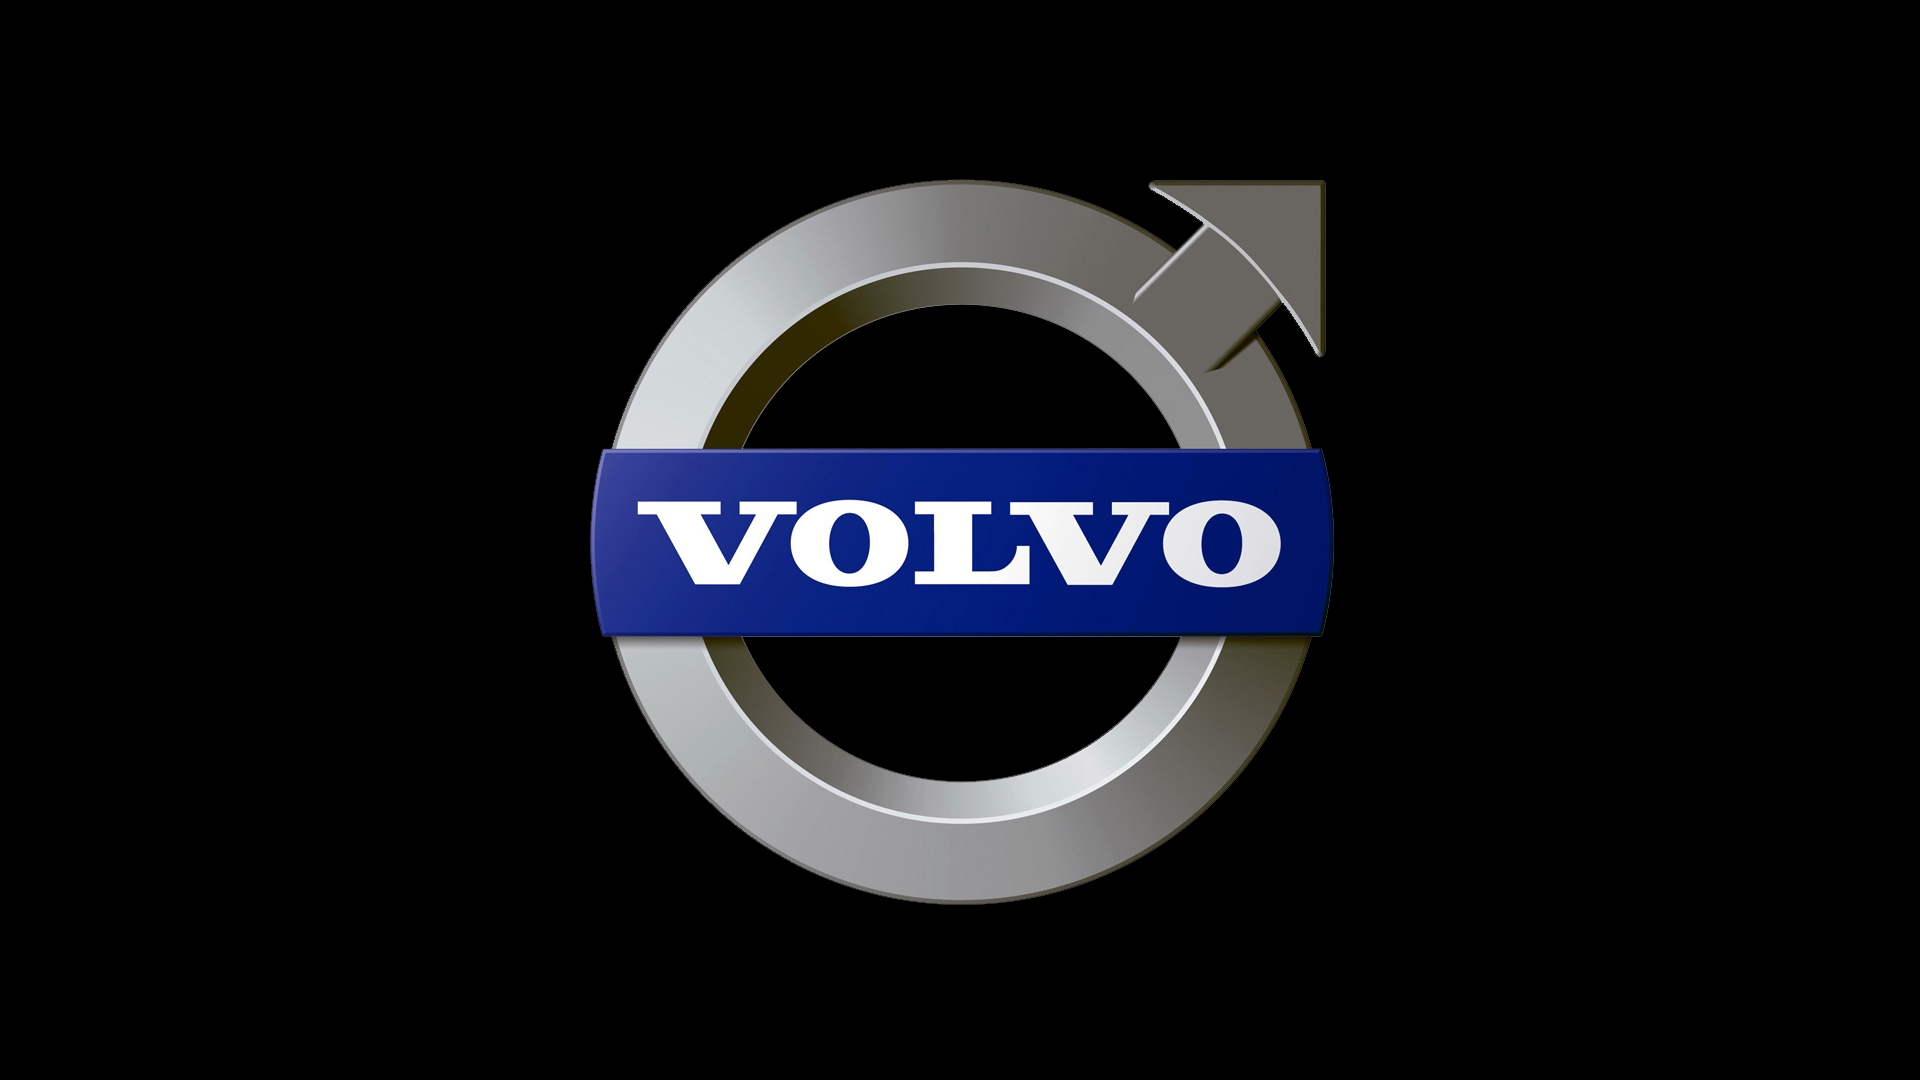 Volvo Hd Wallpaper